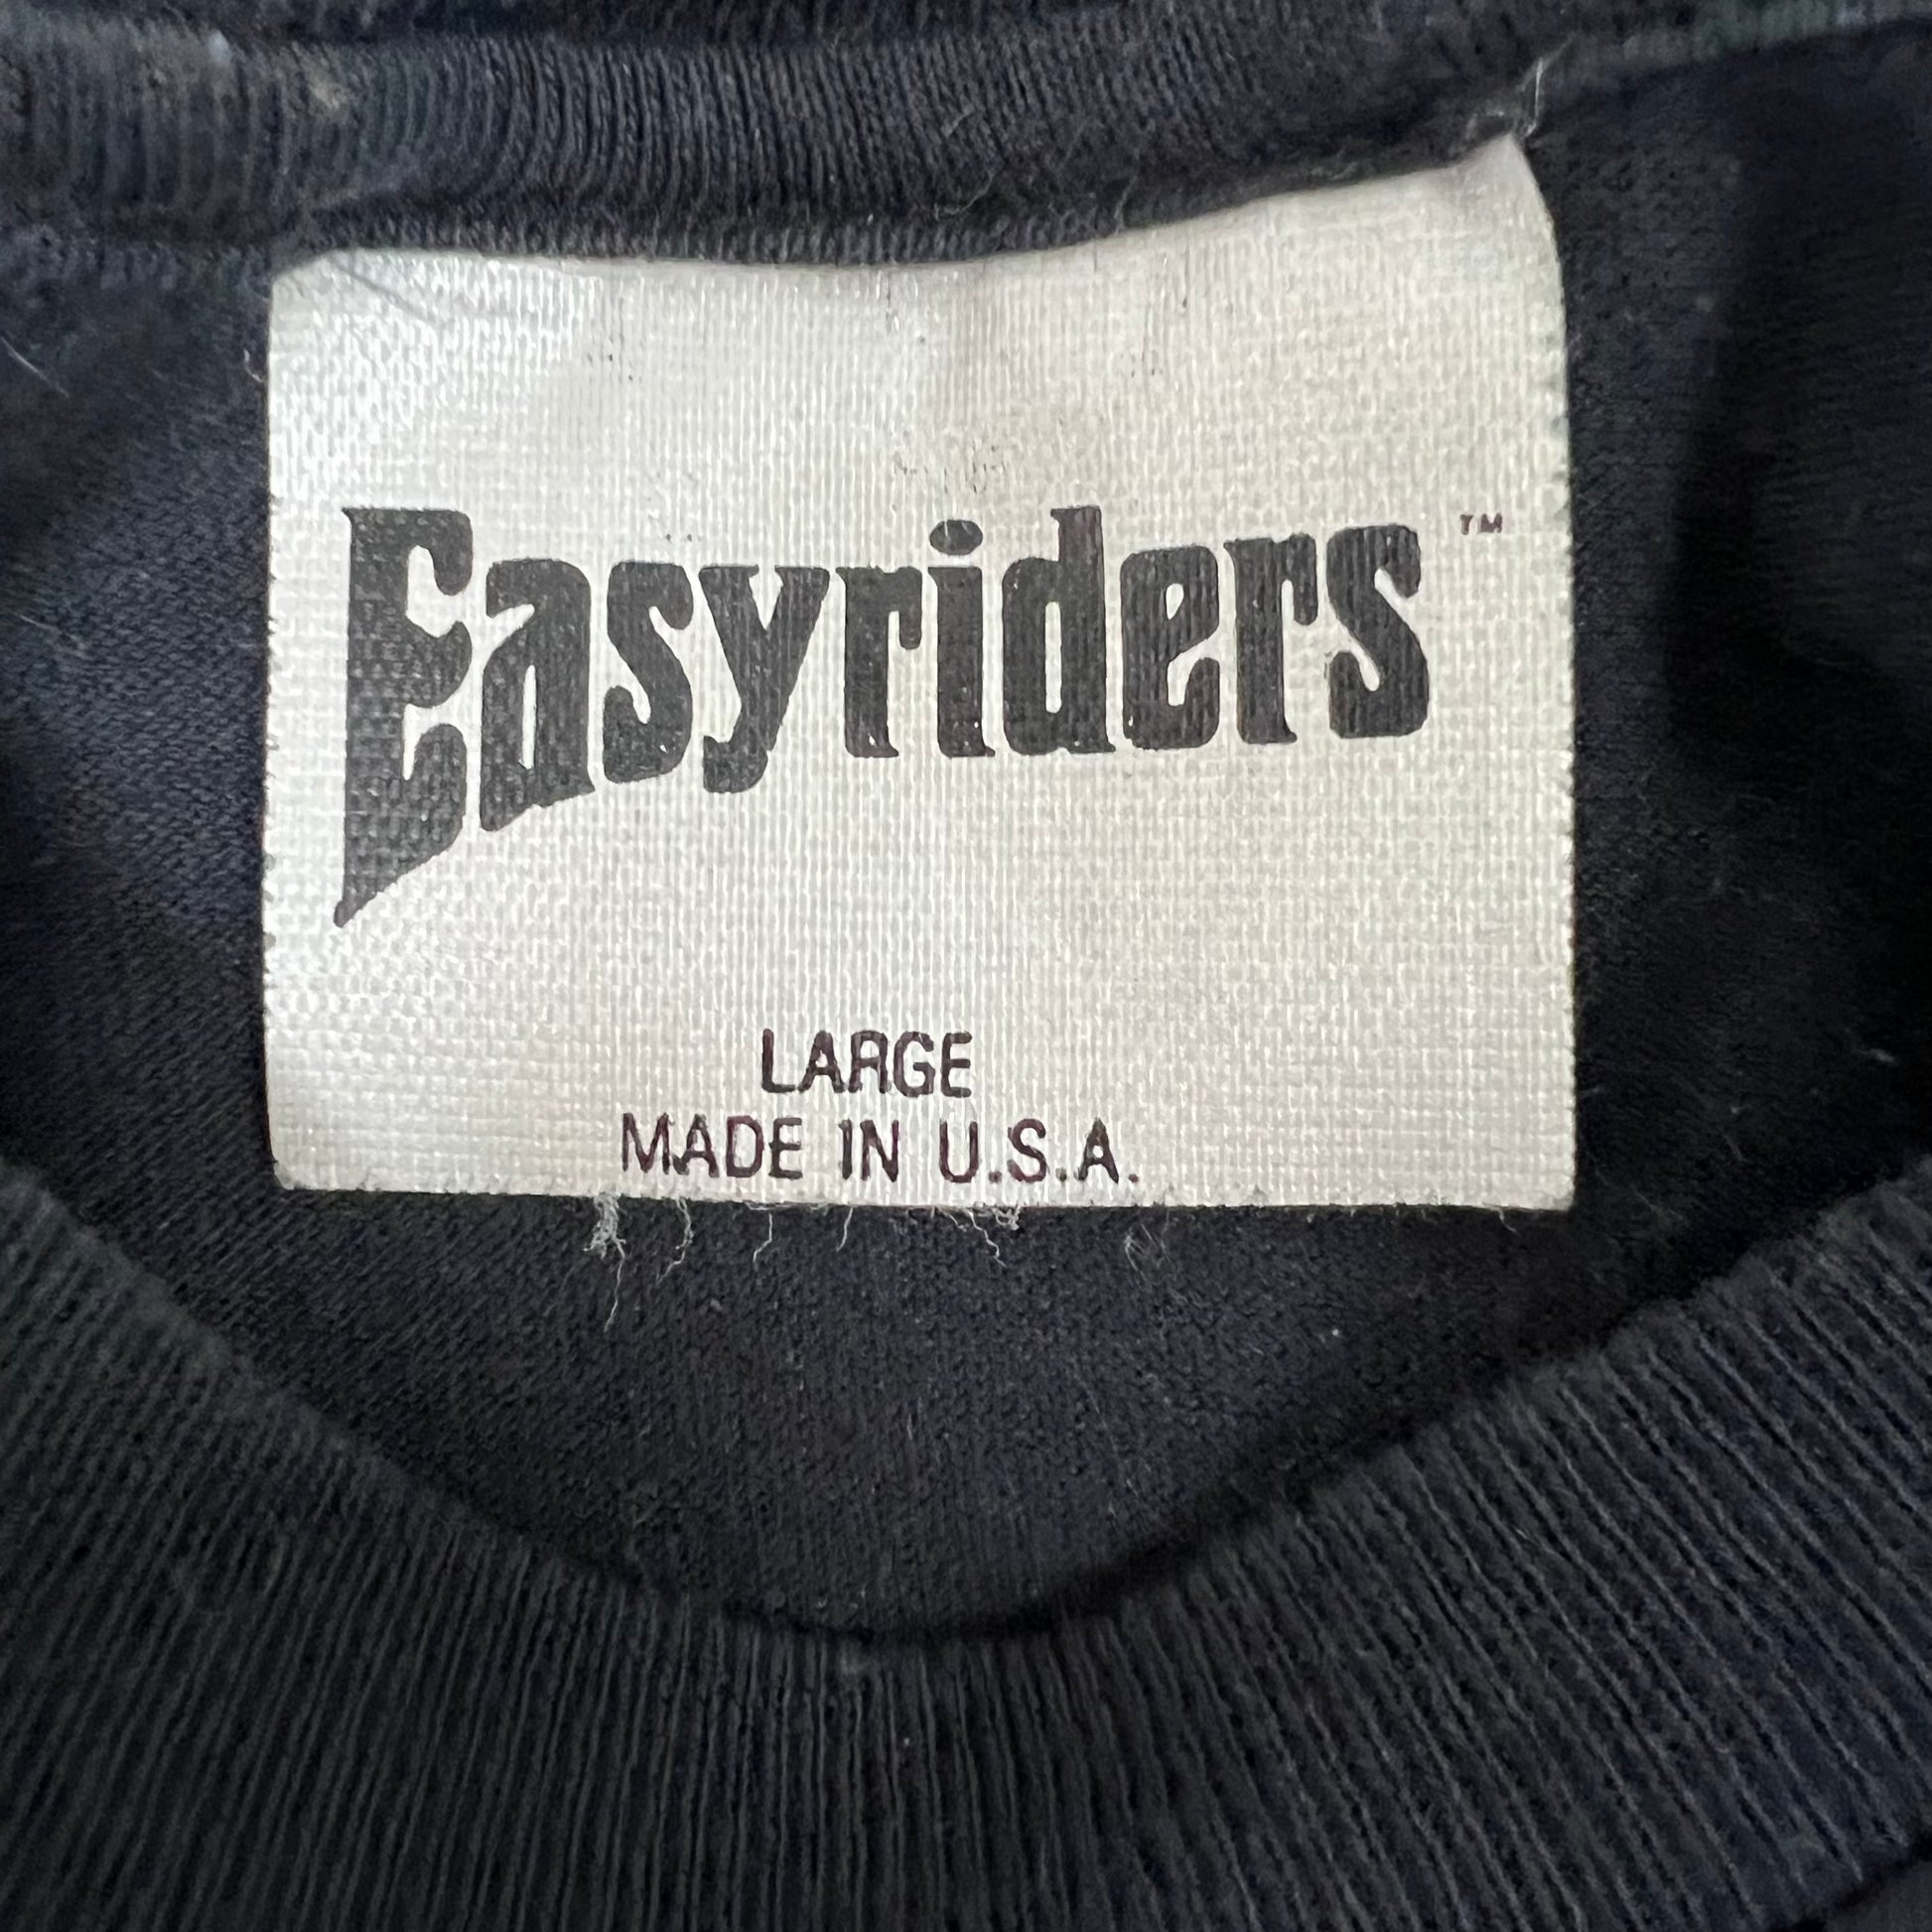 Classic Easyriders Magazine Issue 563 